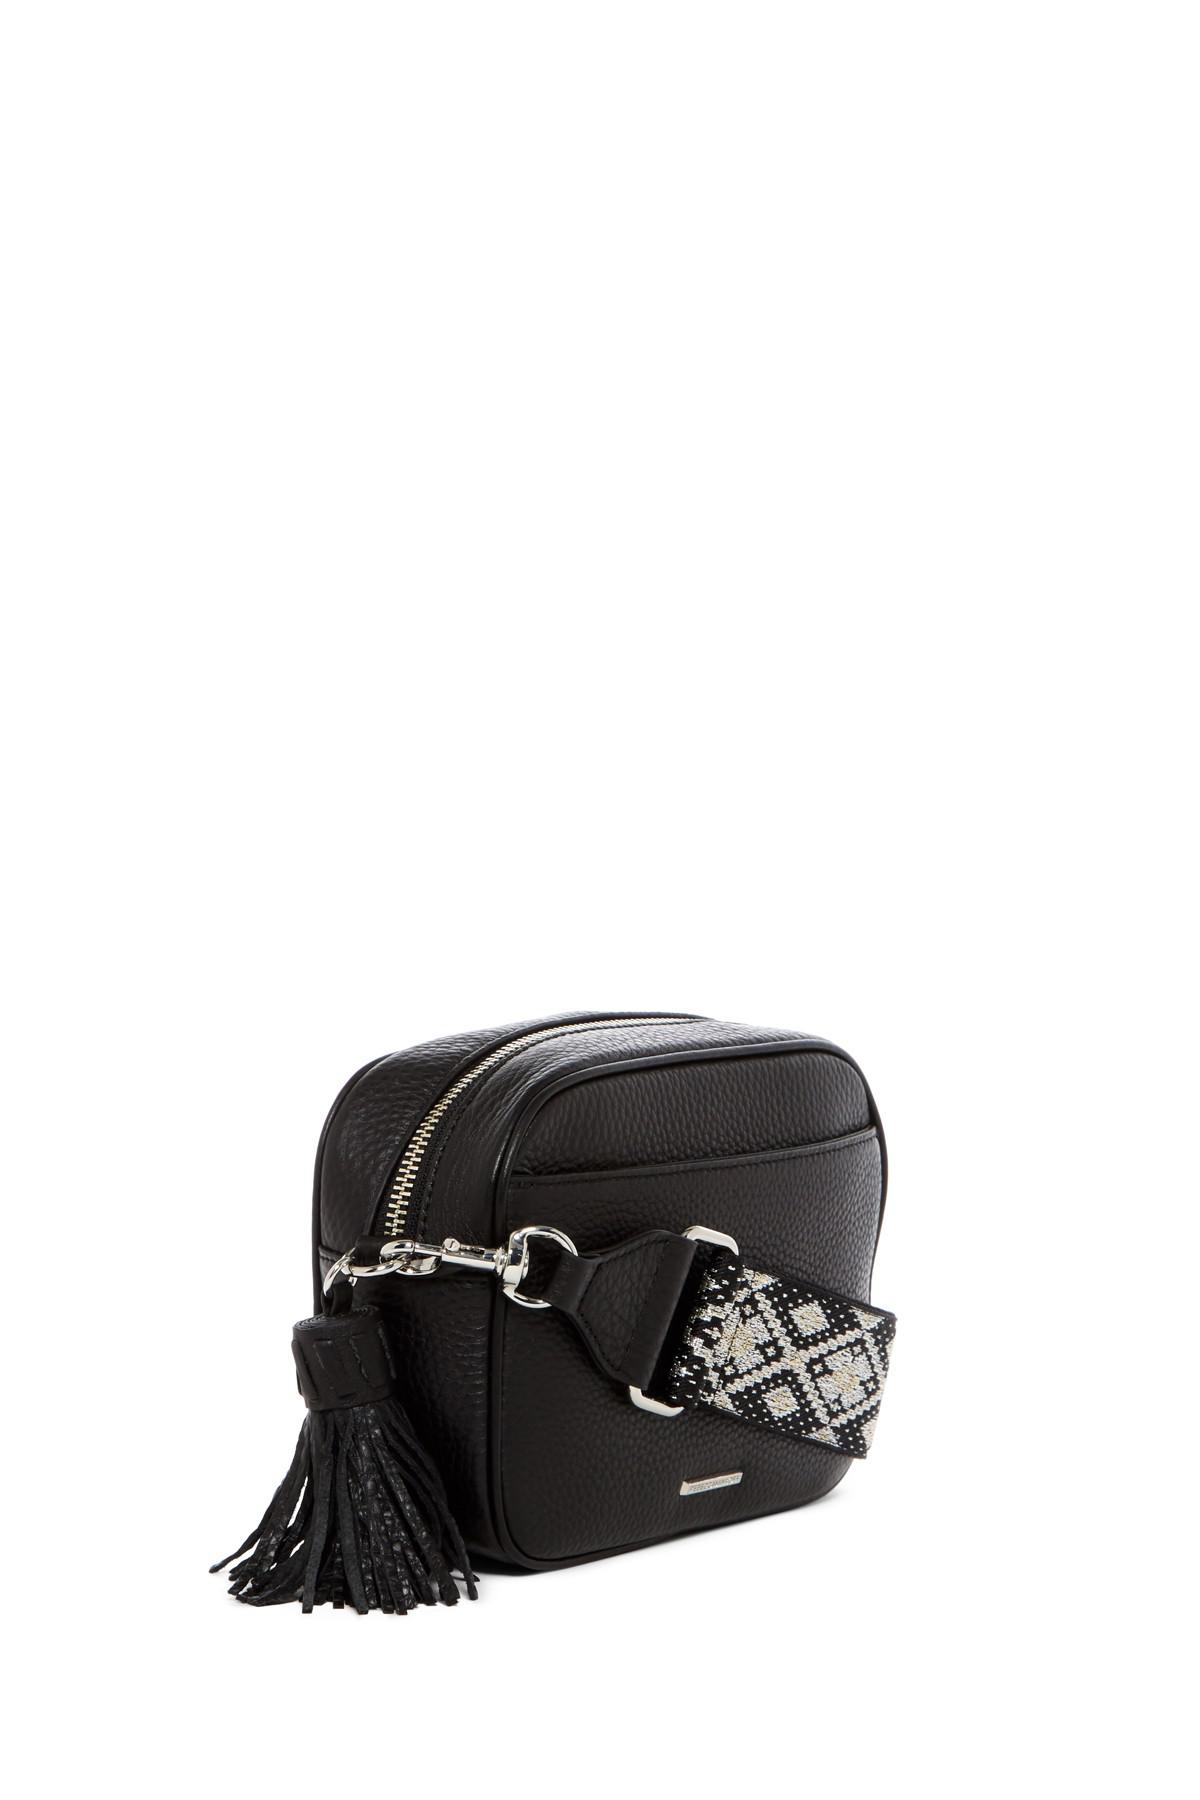 Lyst - Rebecca Minkoff Bryn Leather Camera Bag With Guitar Strap in Black